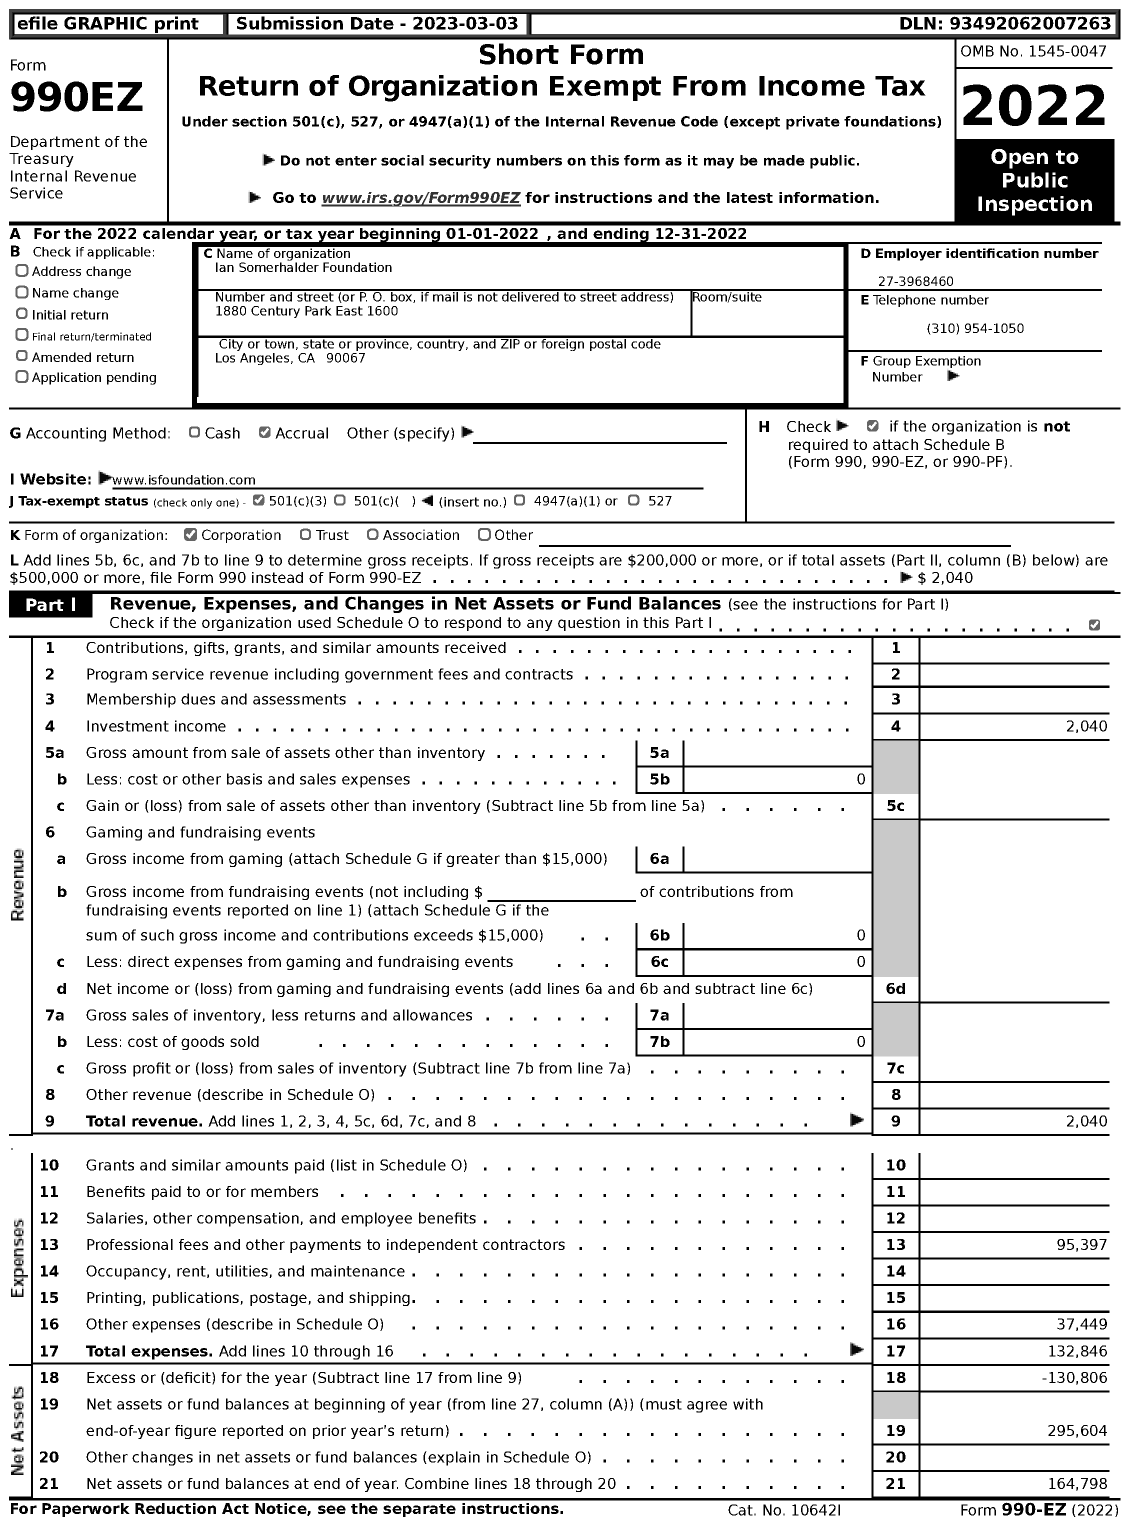 Image of first page of 2022 Form 990EZ for Ian Somerhalder Foundation